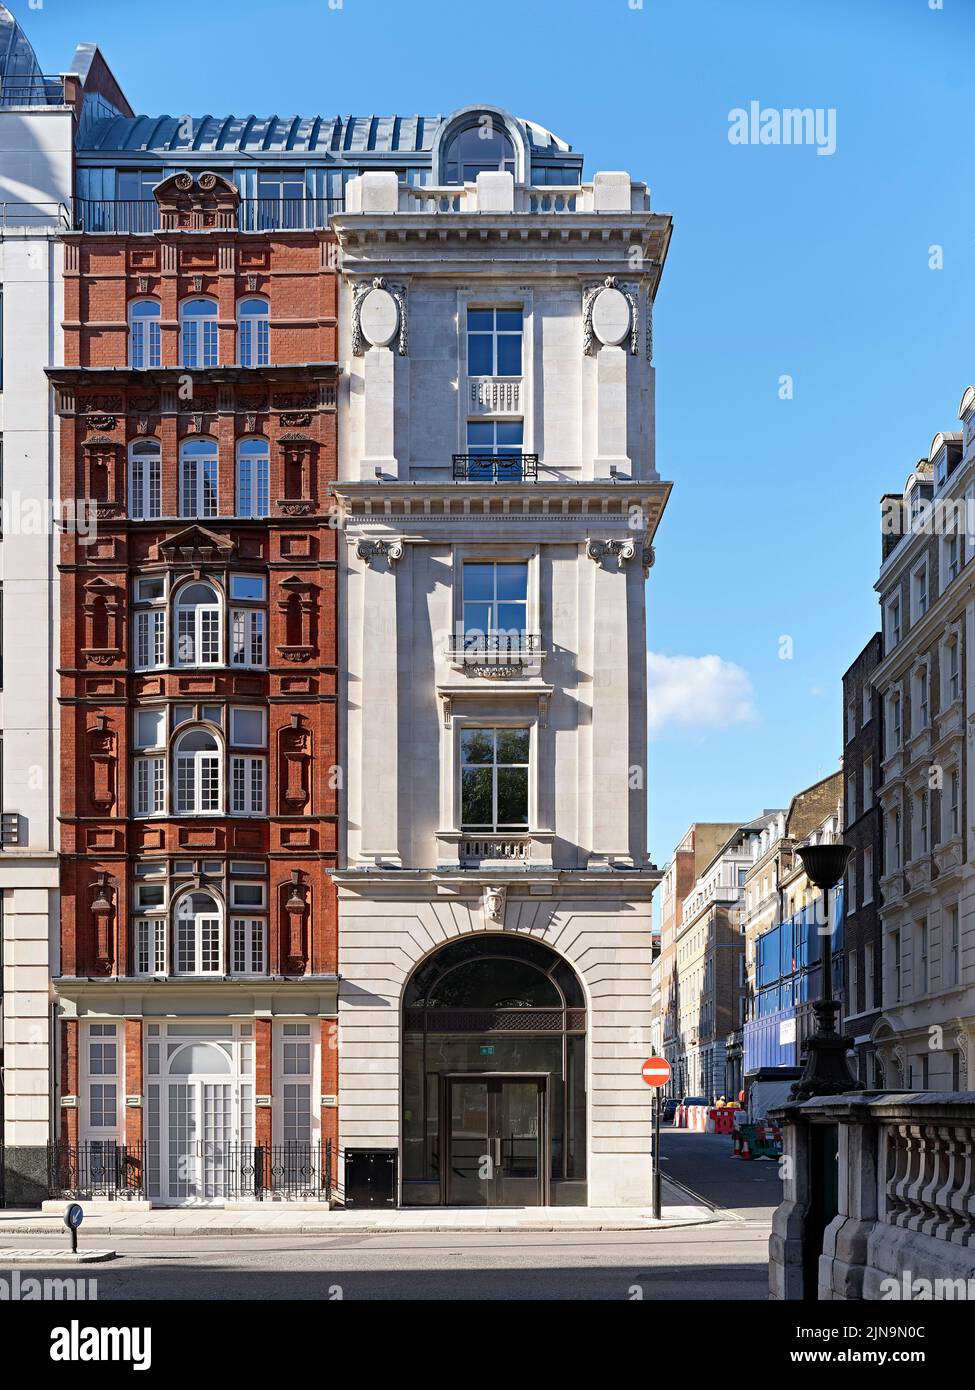 Historic street facades on St James' Square. 30 St James' Square, London, United Kingdom. Architect: Eric Parry Architects Ltd, 2021. Stock Photo